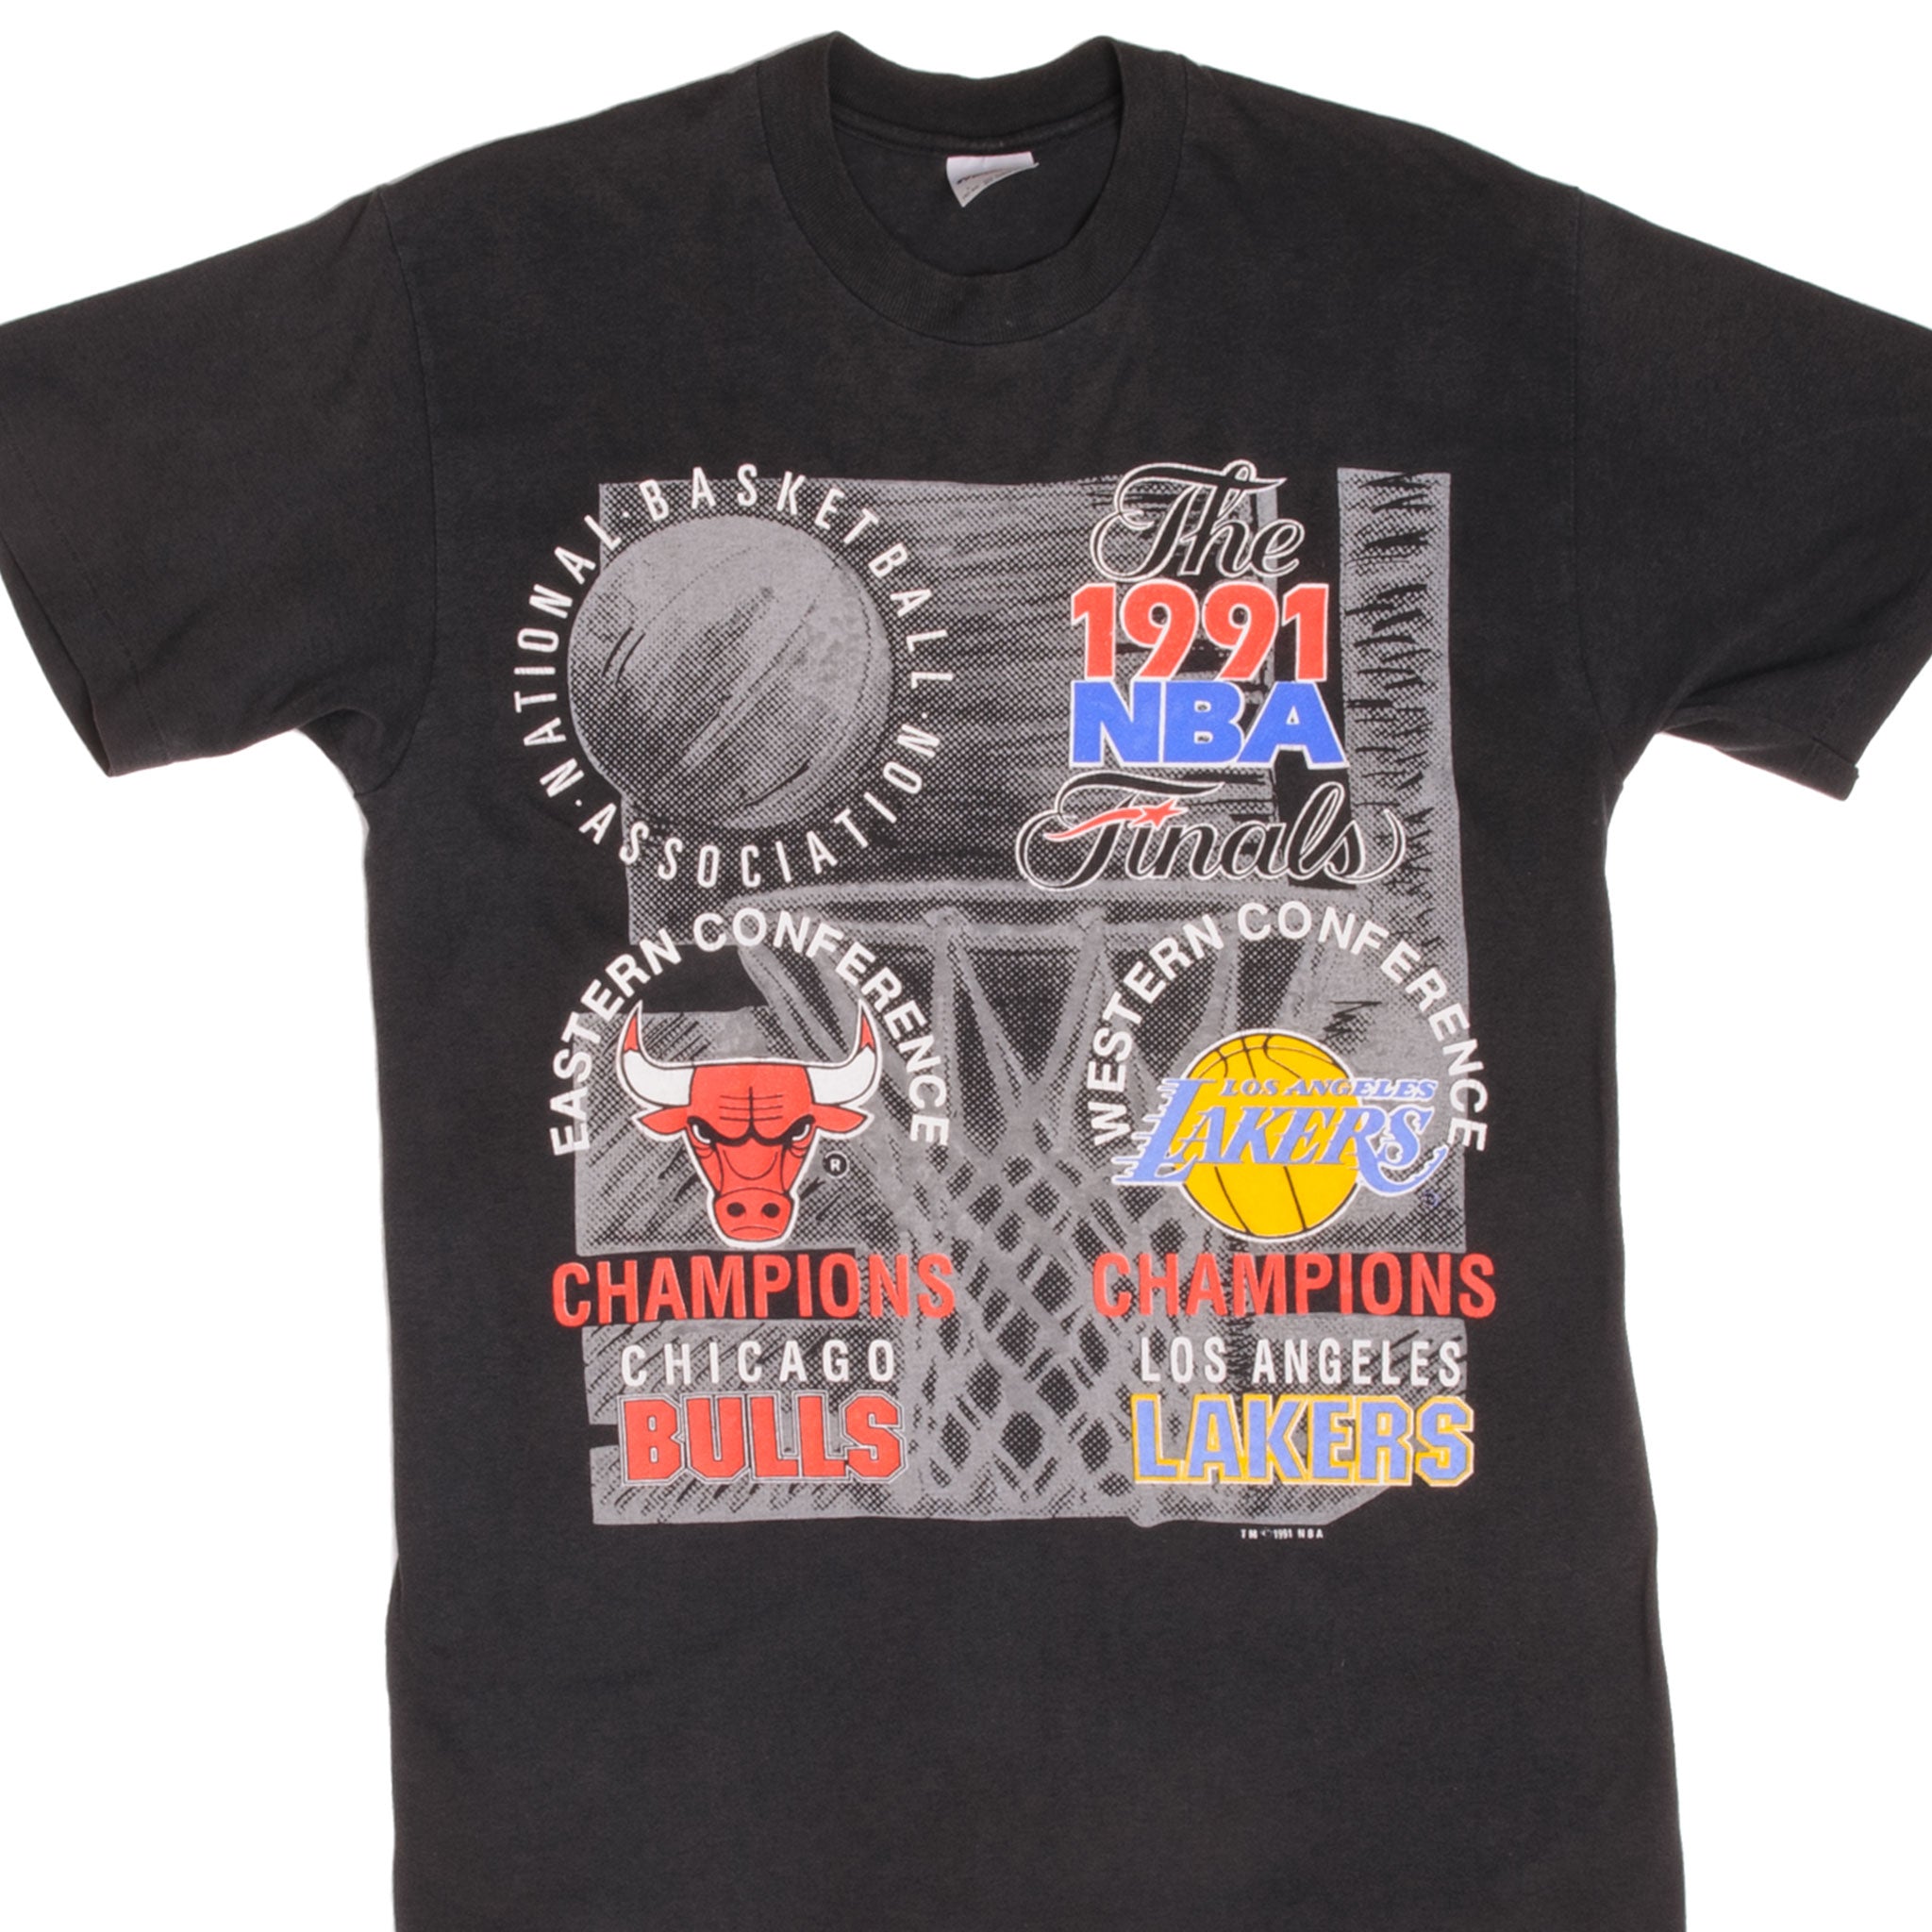 Sports / College Vintage NBA Chicago Bulls Vs La Lakers Tee Shirt 1991 Medium Made in USA